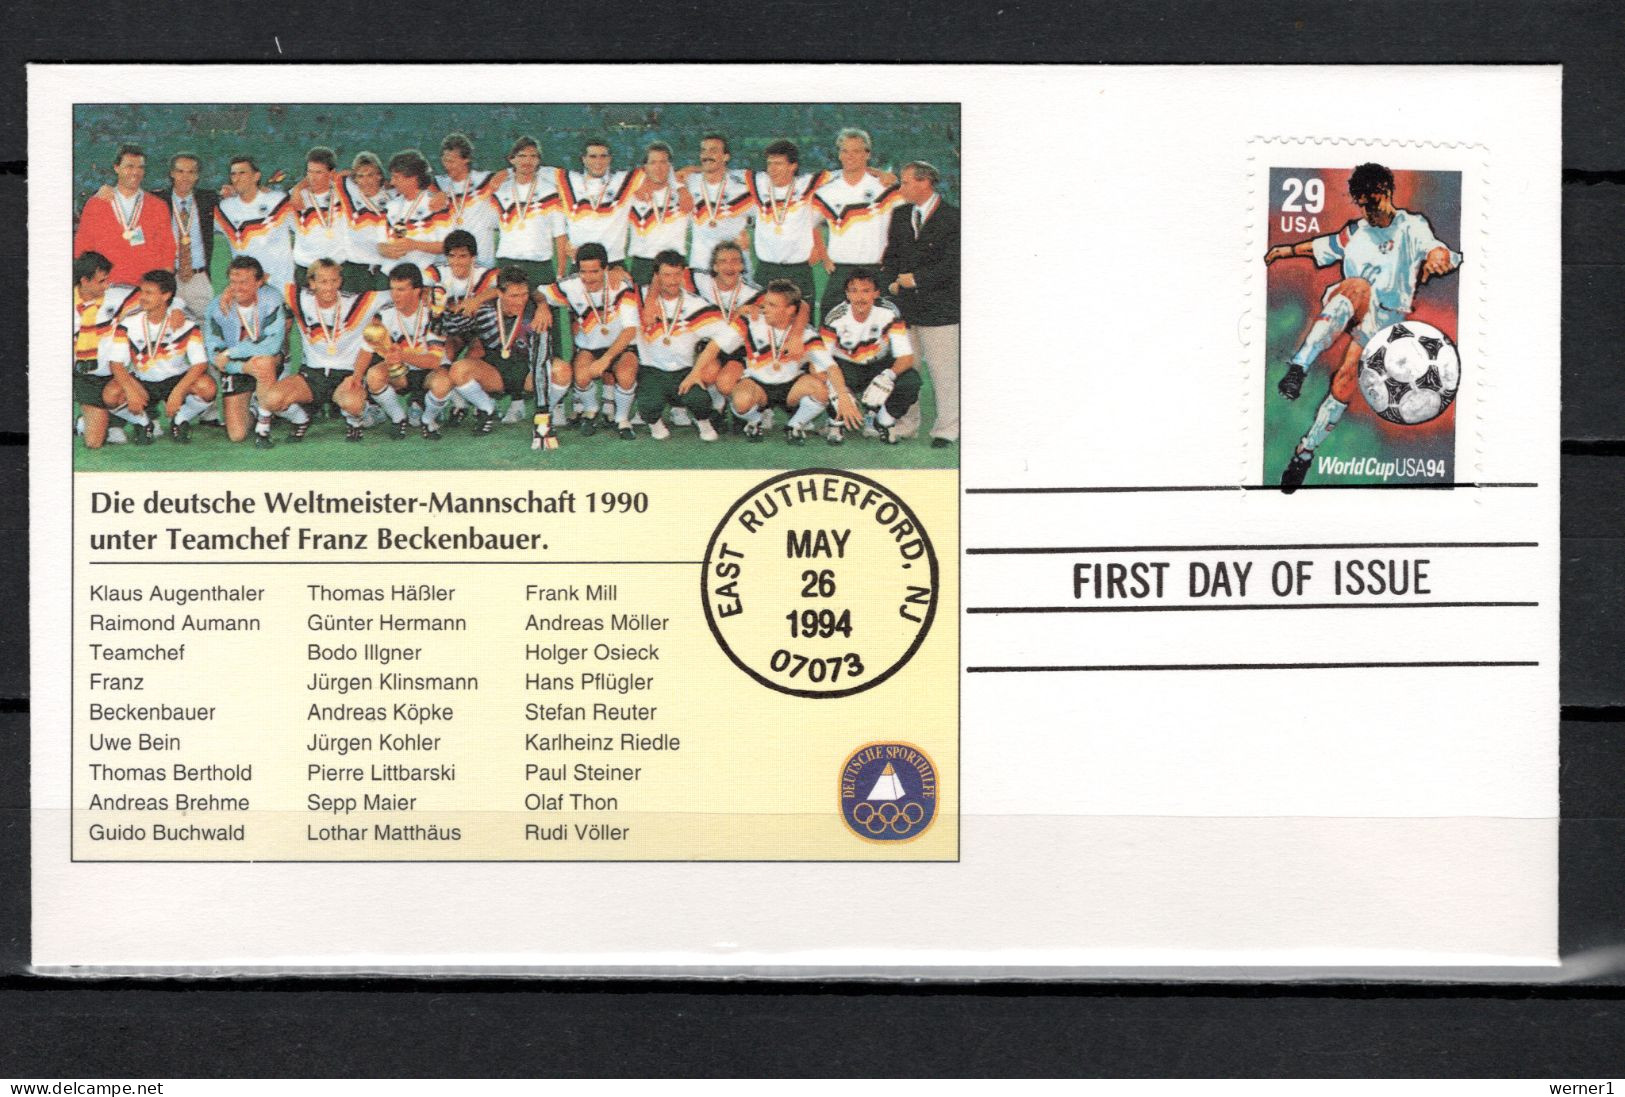 USA 1994 Football Soccer World Cup Commemorative Cover - 1994 – USA